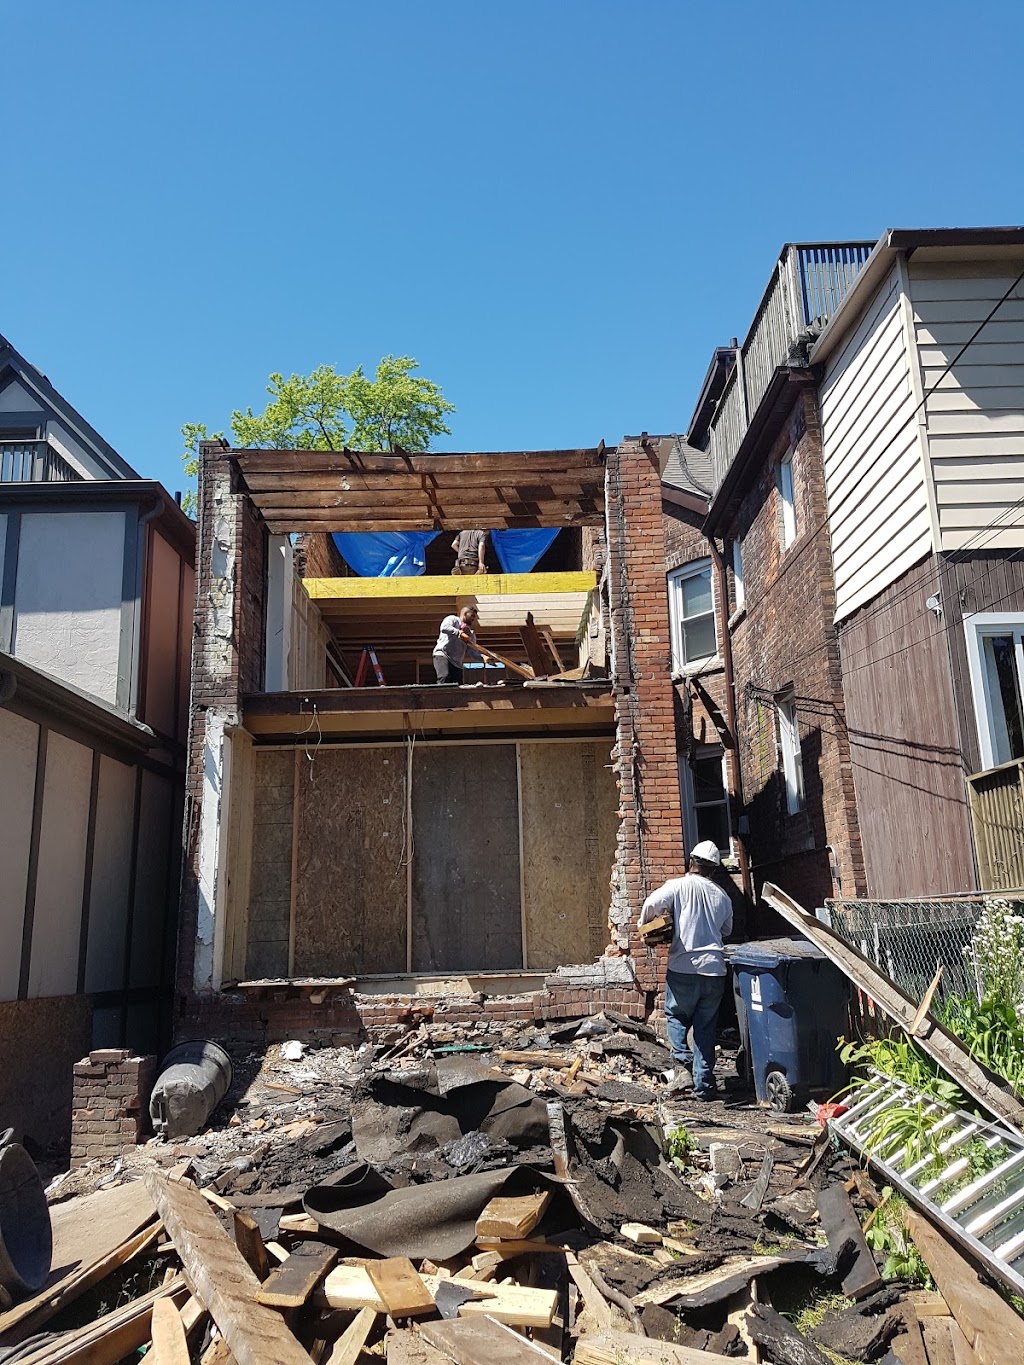 Yankeys Demolition | 111 Pemberton Ave, North York, ON M2M 1Y4, Canada | Phone: (647) 916-3206